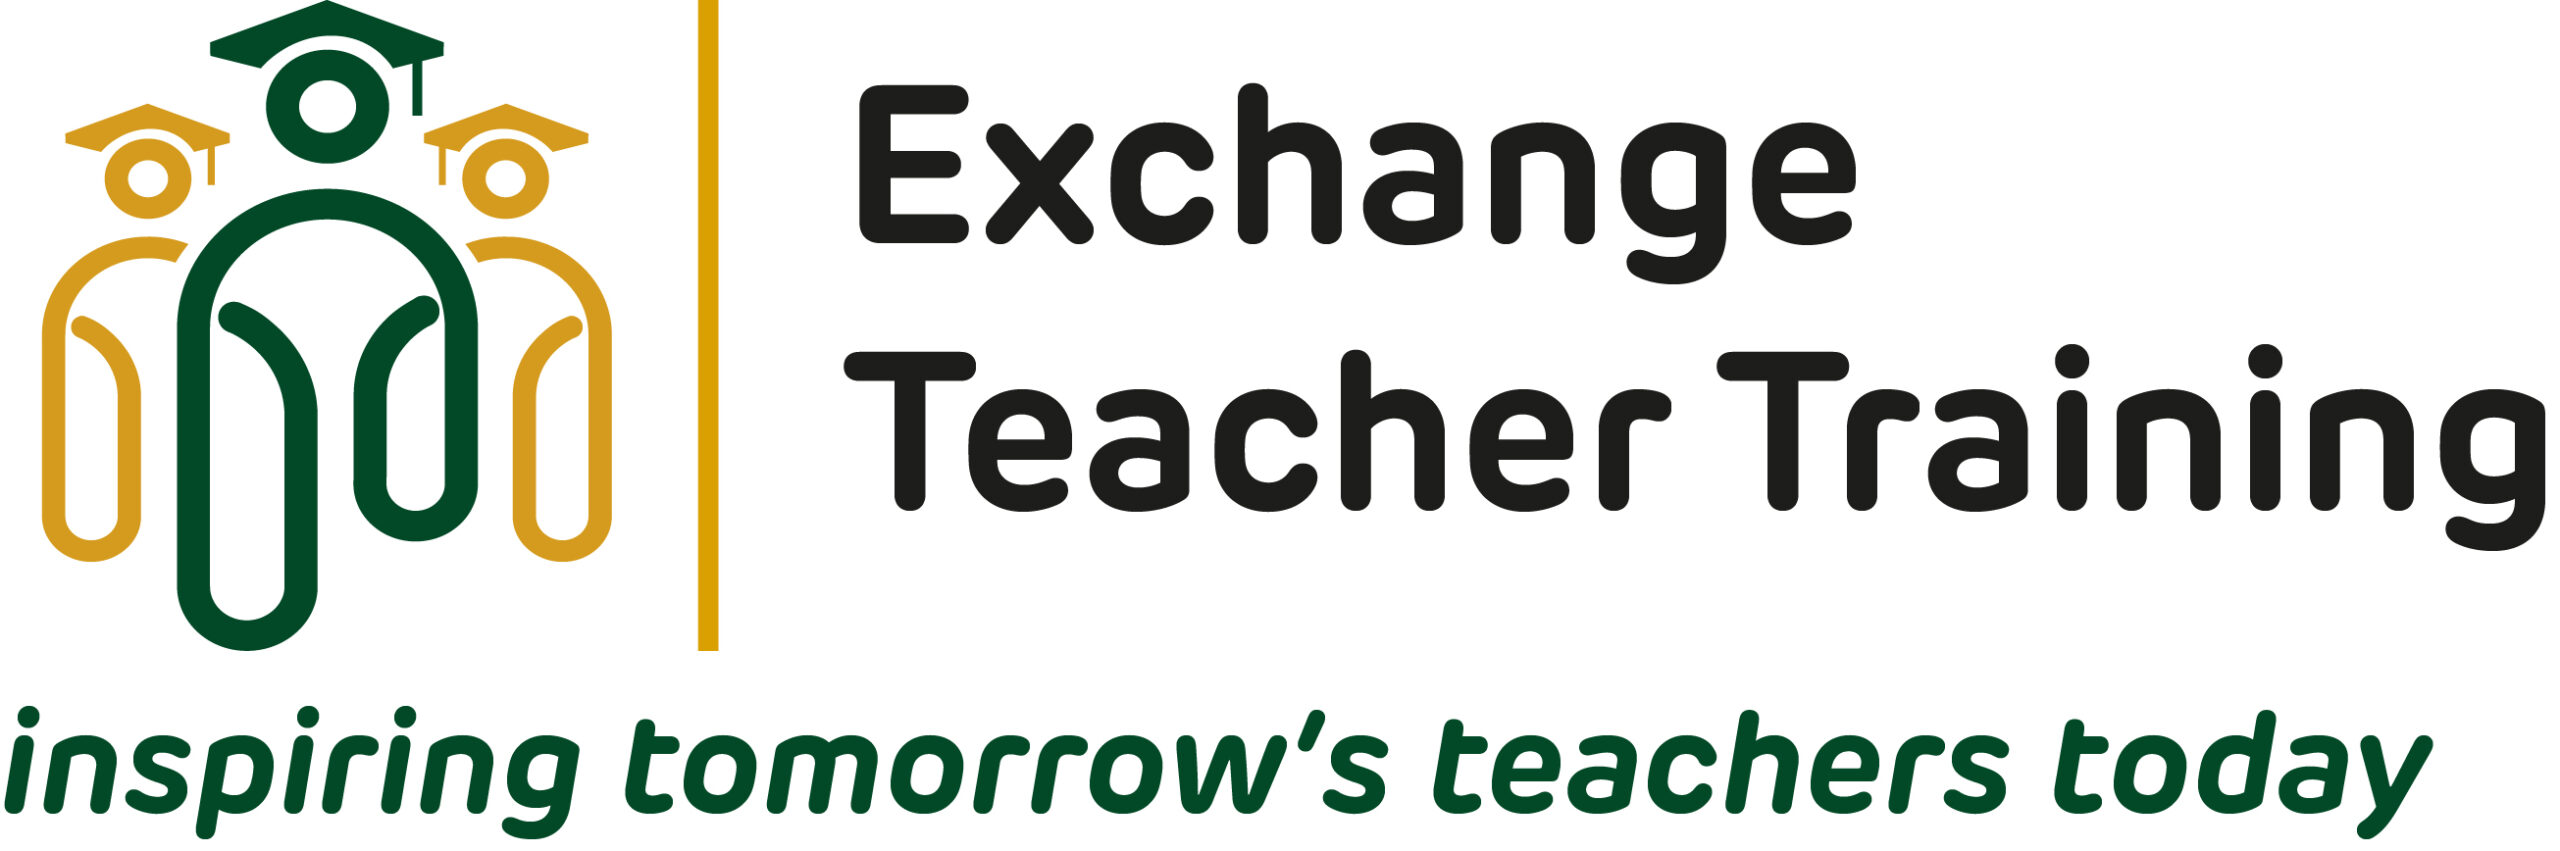 Exchange Teacher Training